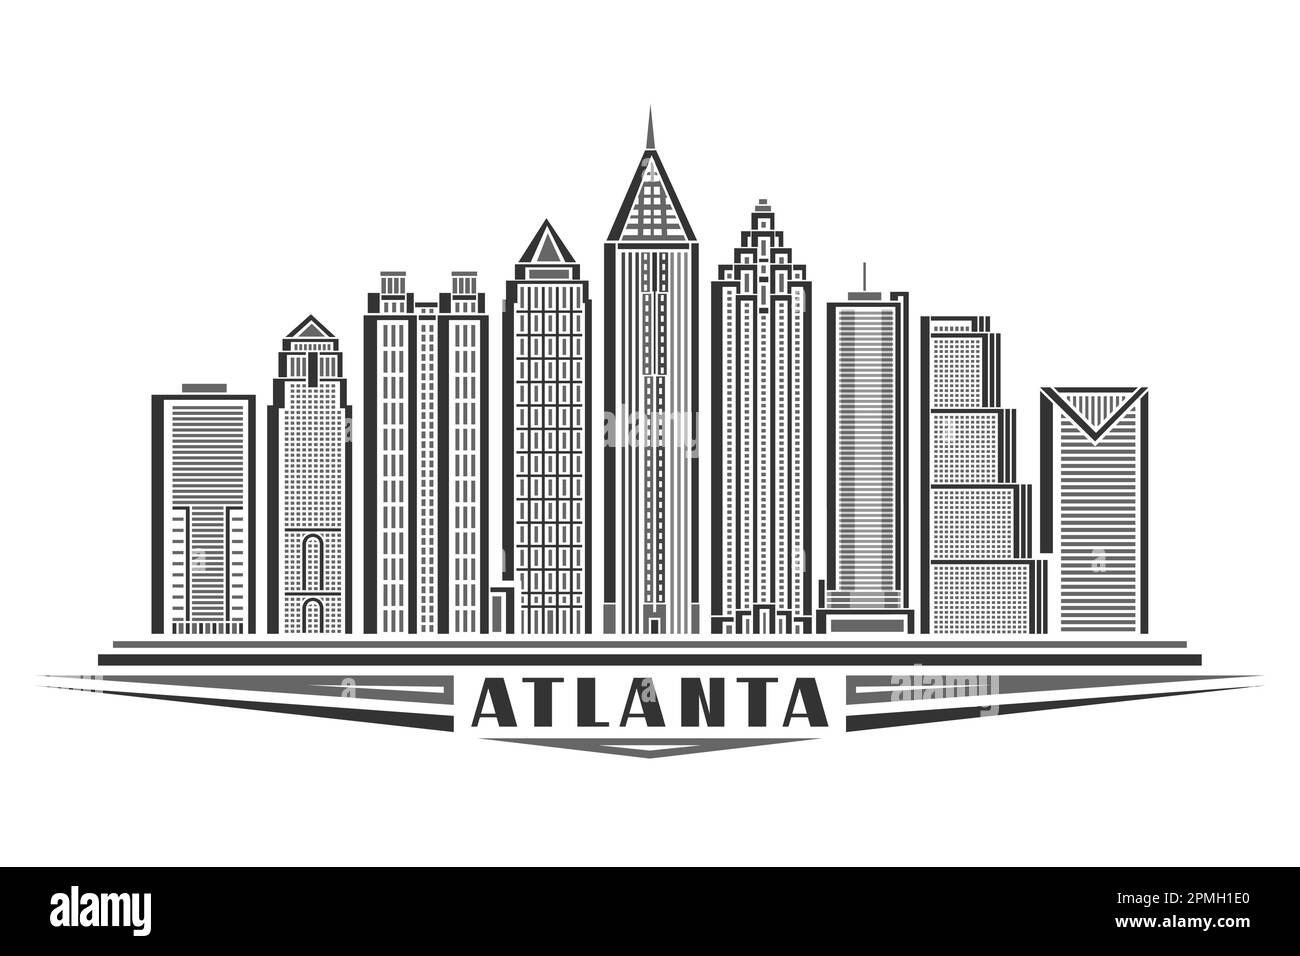 Vector illustration of Atlanta, monochrome horizontal card with linear design atlanta city scape, american urban line art concept with decorative lett Stock Vector